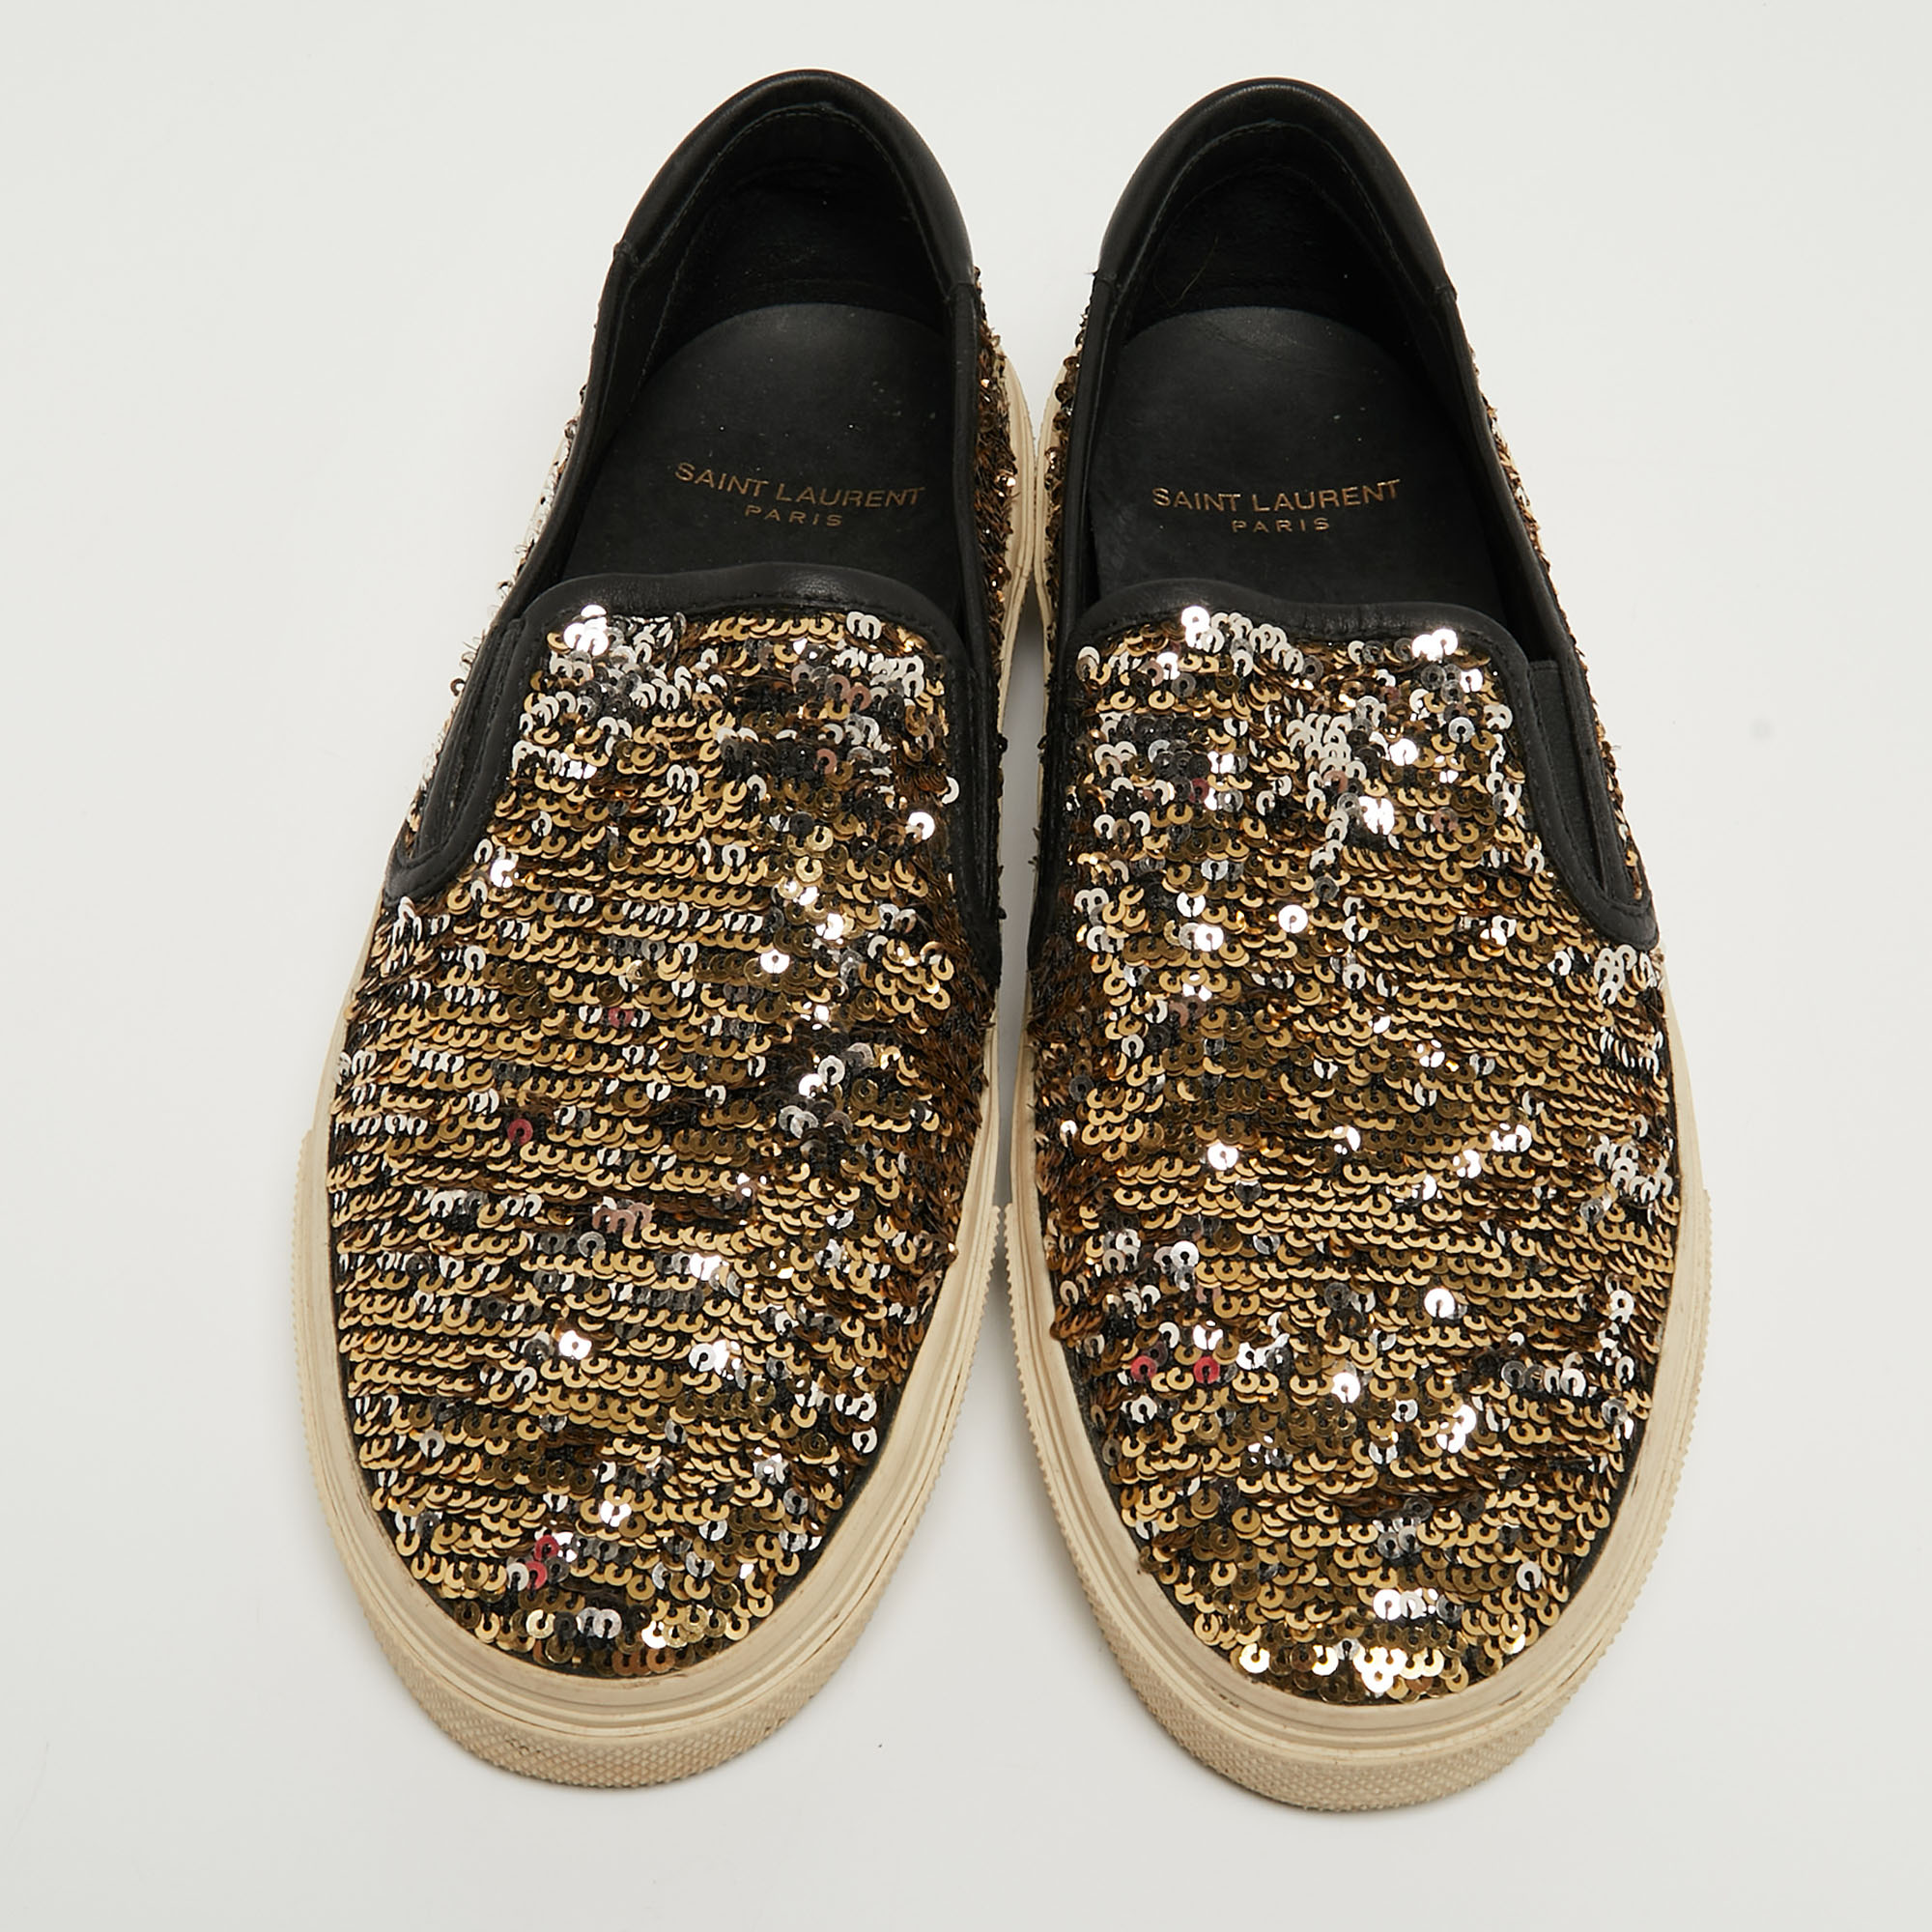 Saint Laurent Gold/Silver Sequins Slip On Sneakers Size 37.5